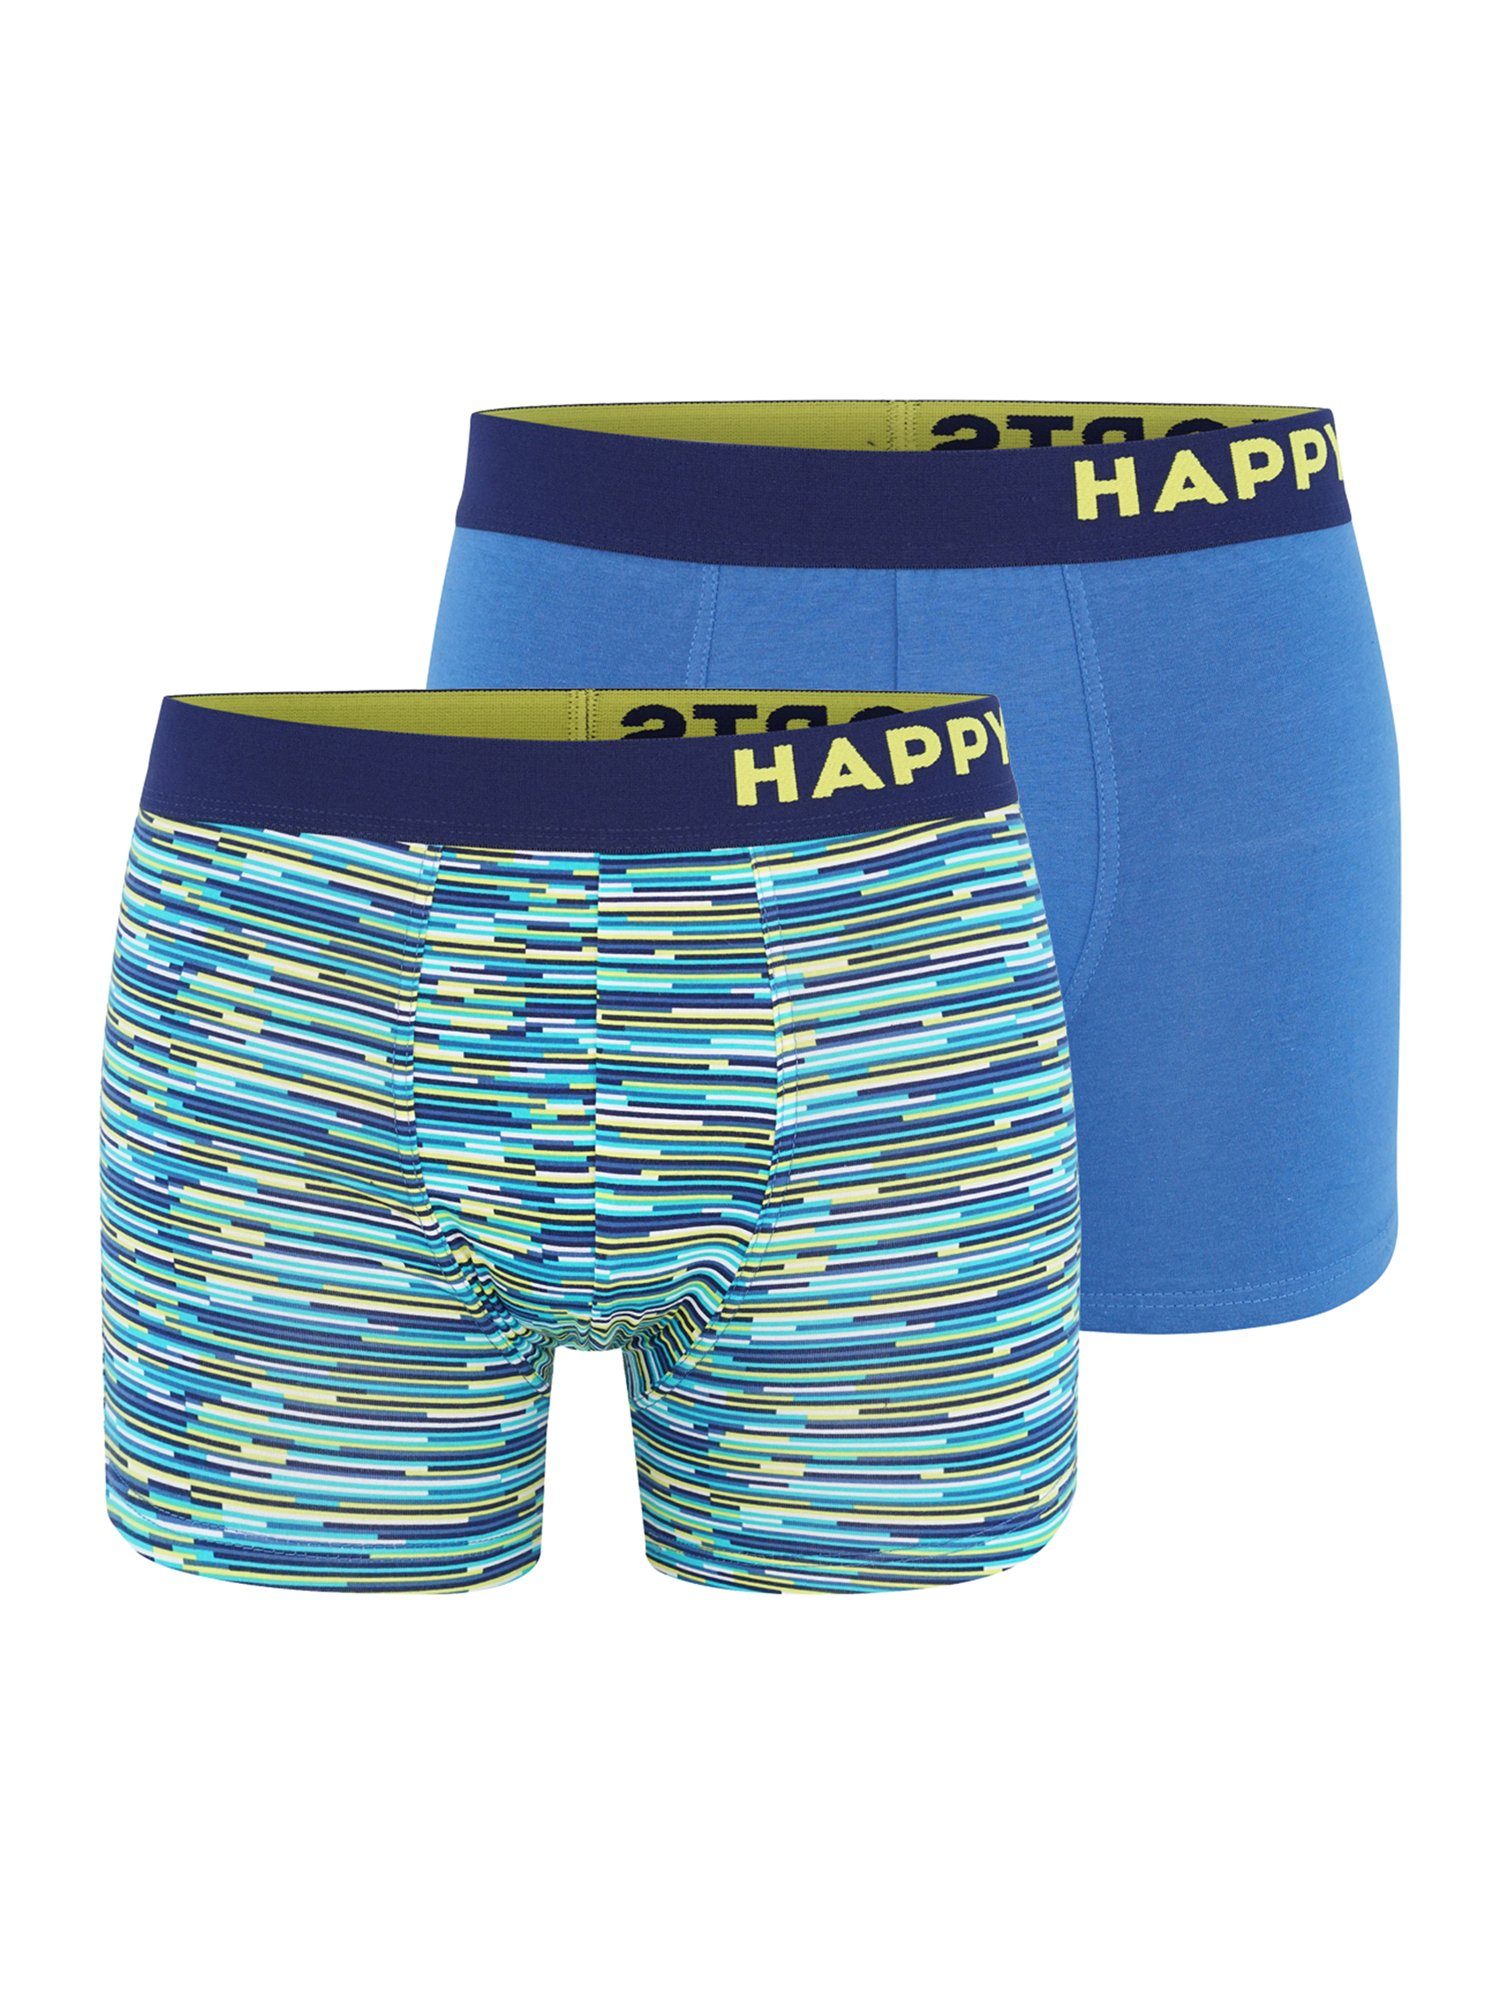 HAPPY SHORTS Retro Pants Motivprint Trunks Abstract Stripes